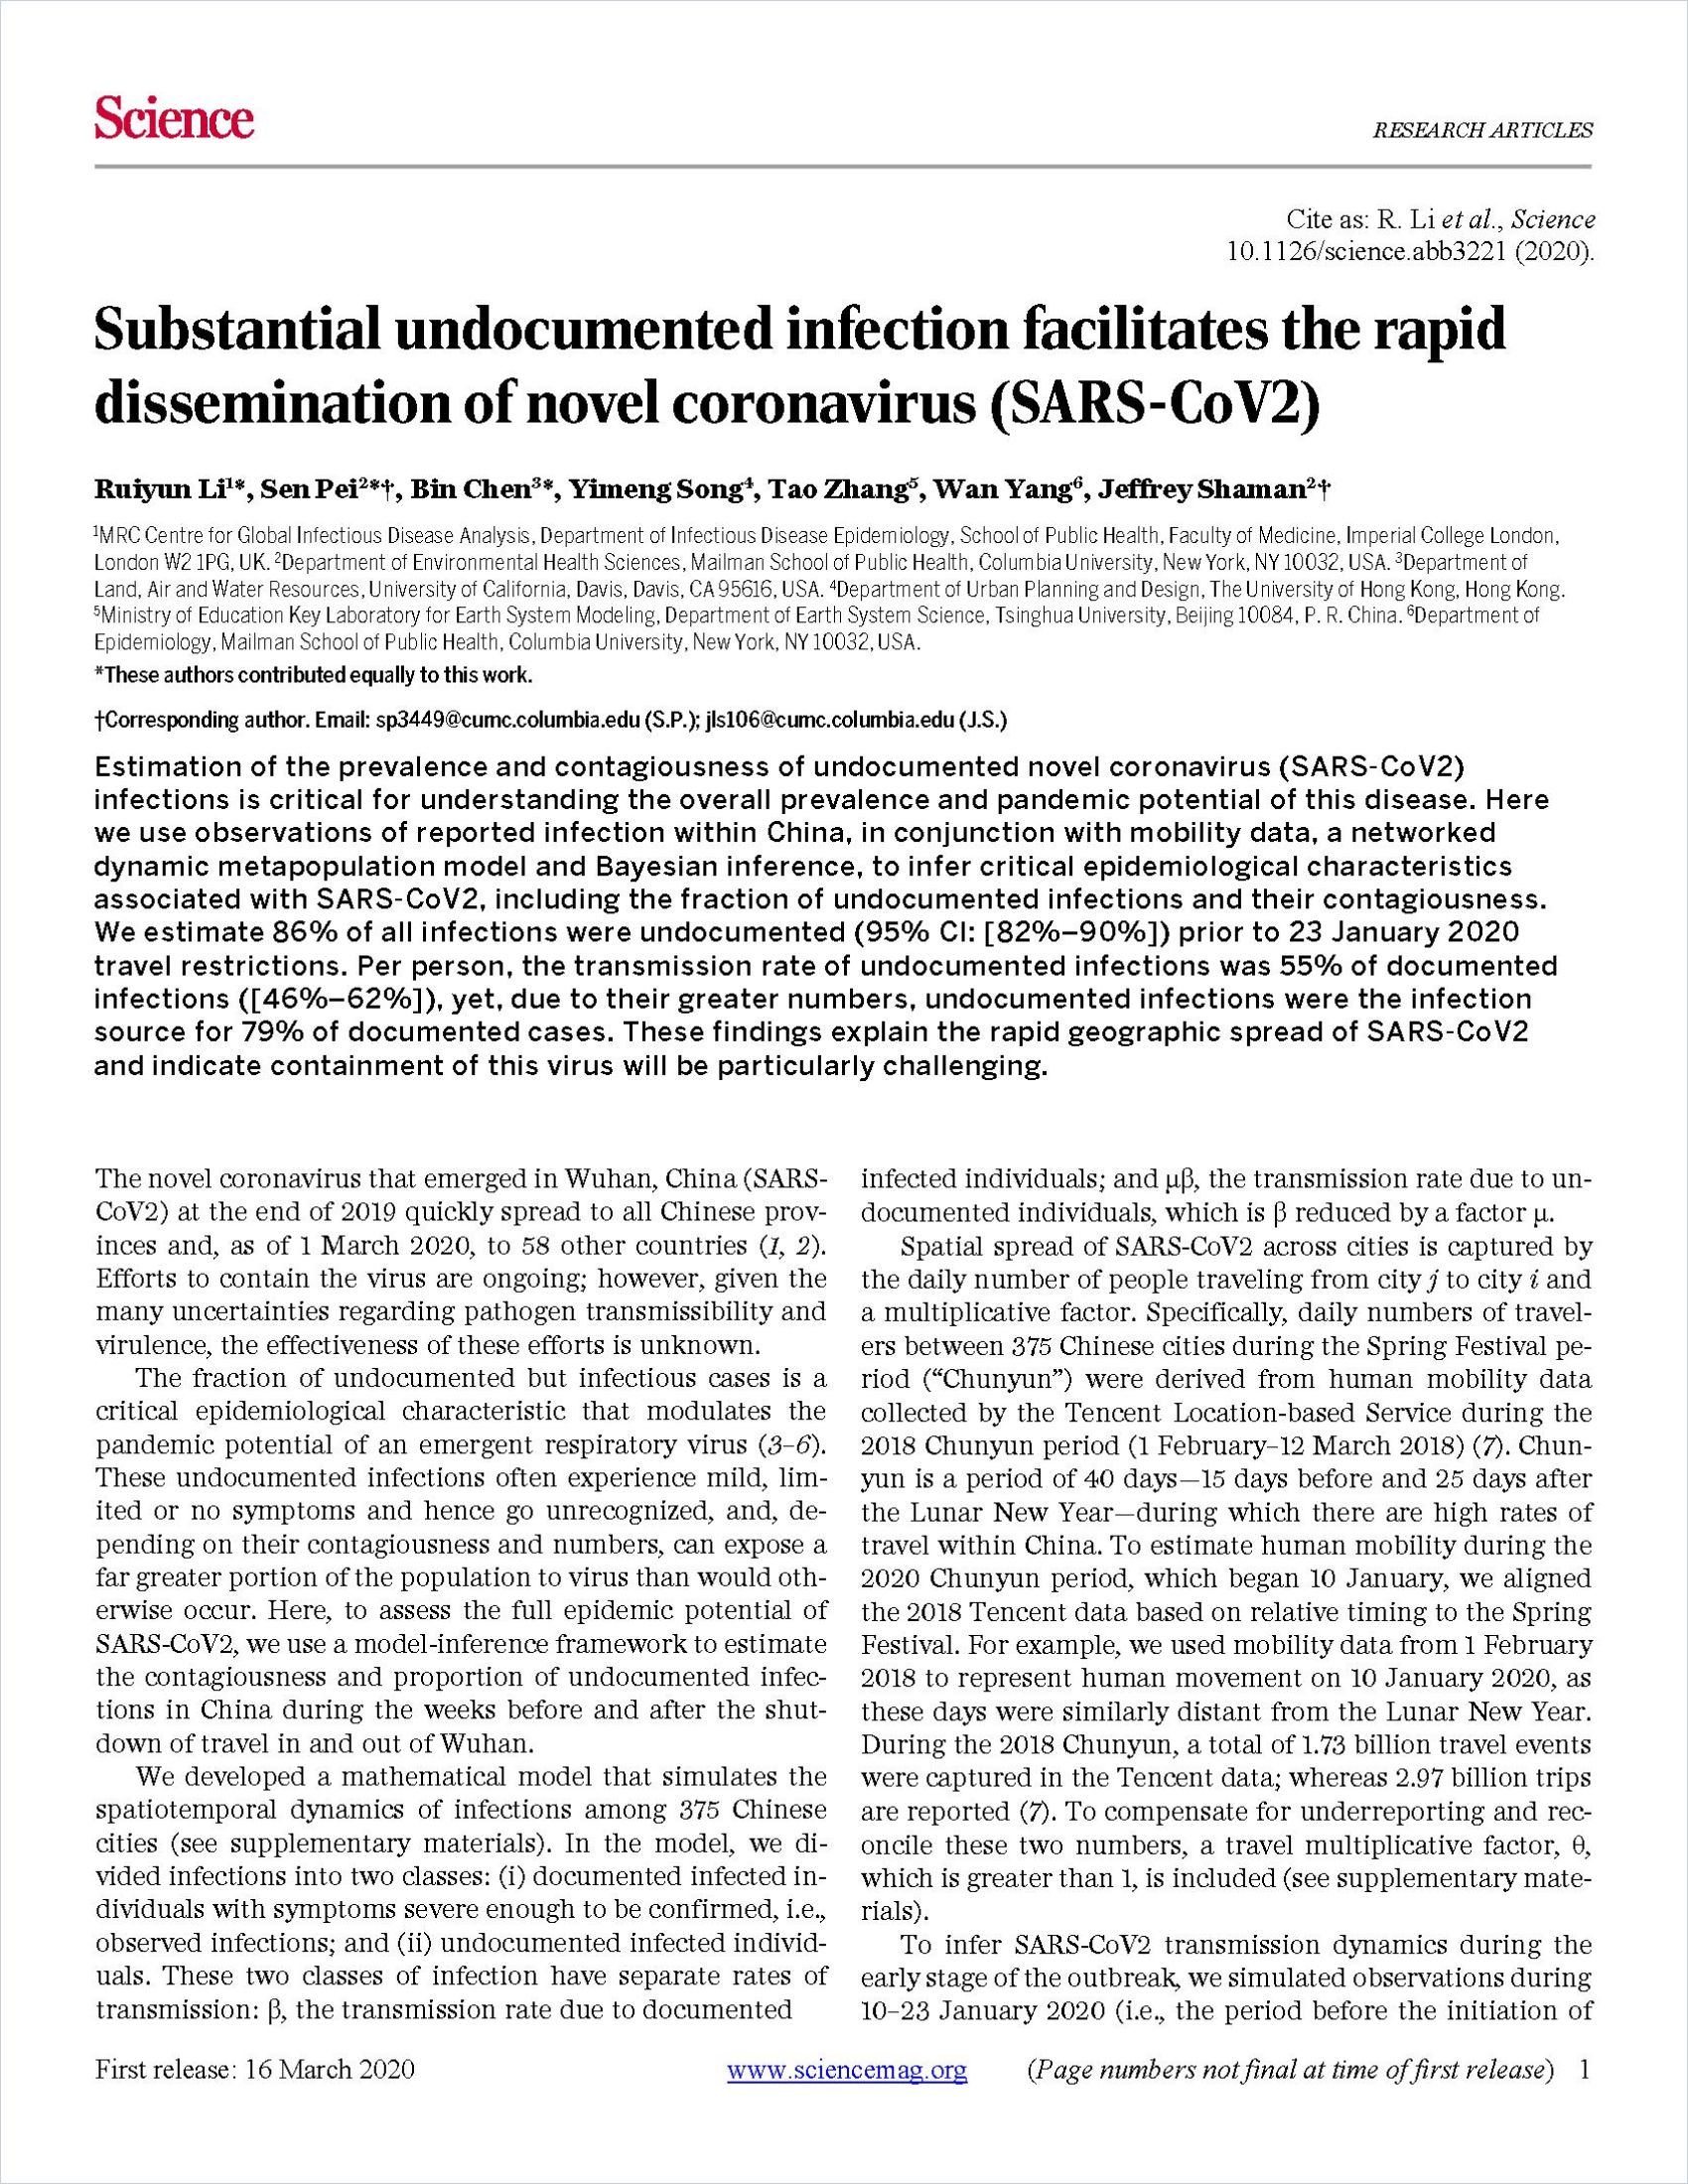 Image of: Substantial Undocumented Infection Facilitates the Rapid Dissemination of Novel Coronavirus (SARS-CoV-2)